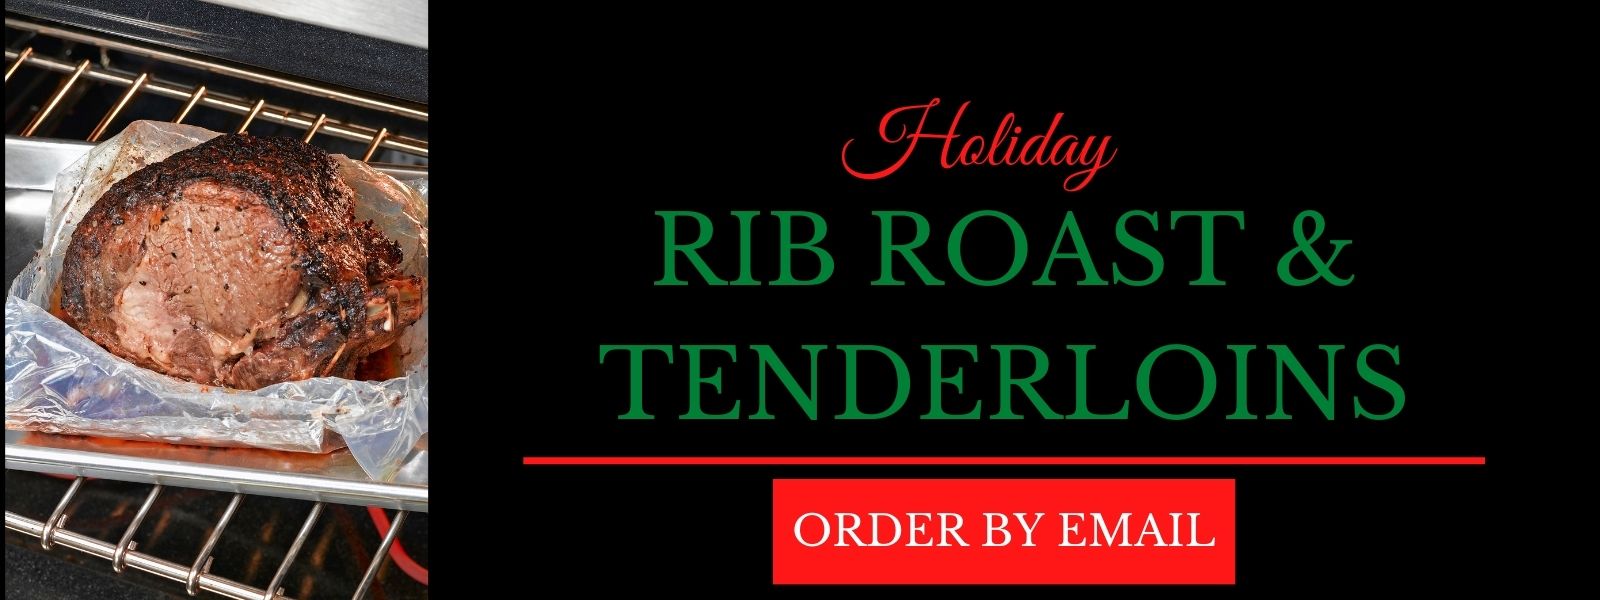 Holiday Rib Roast Order